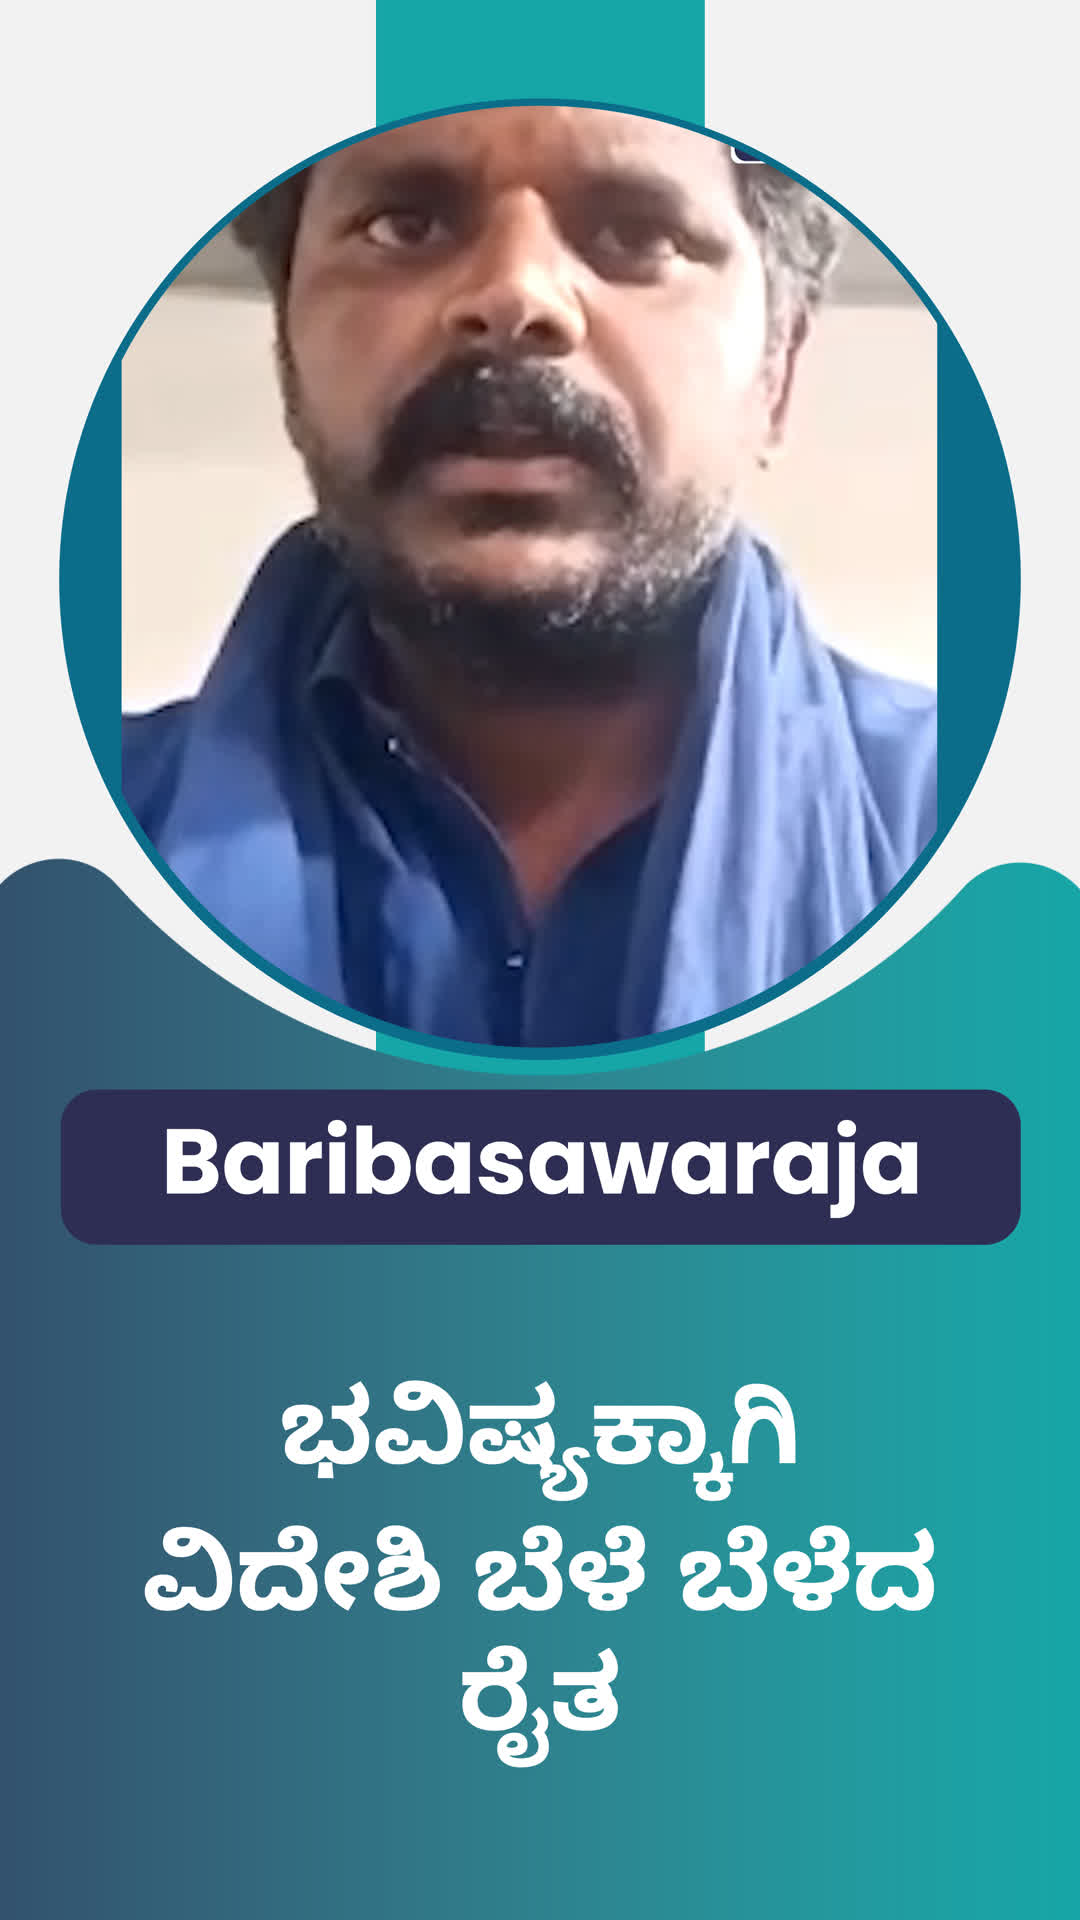 Baribasavaraja basavaraja's Honest Review of ffreedom app - Ballari ,Karnataka